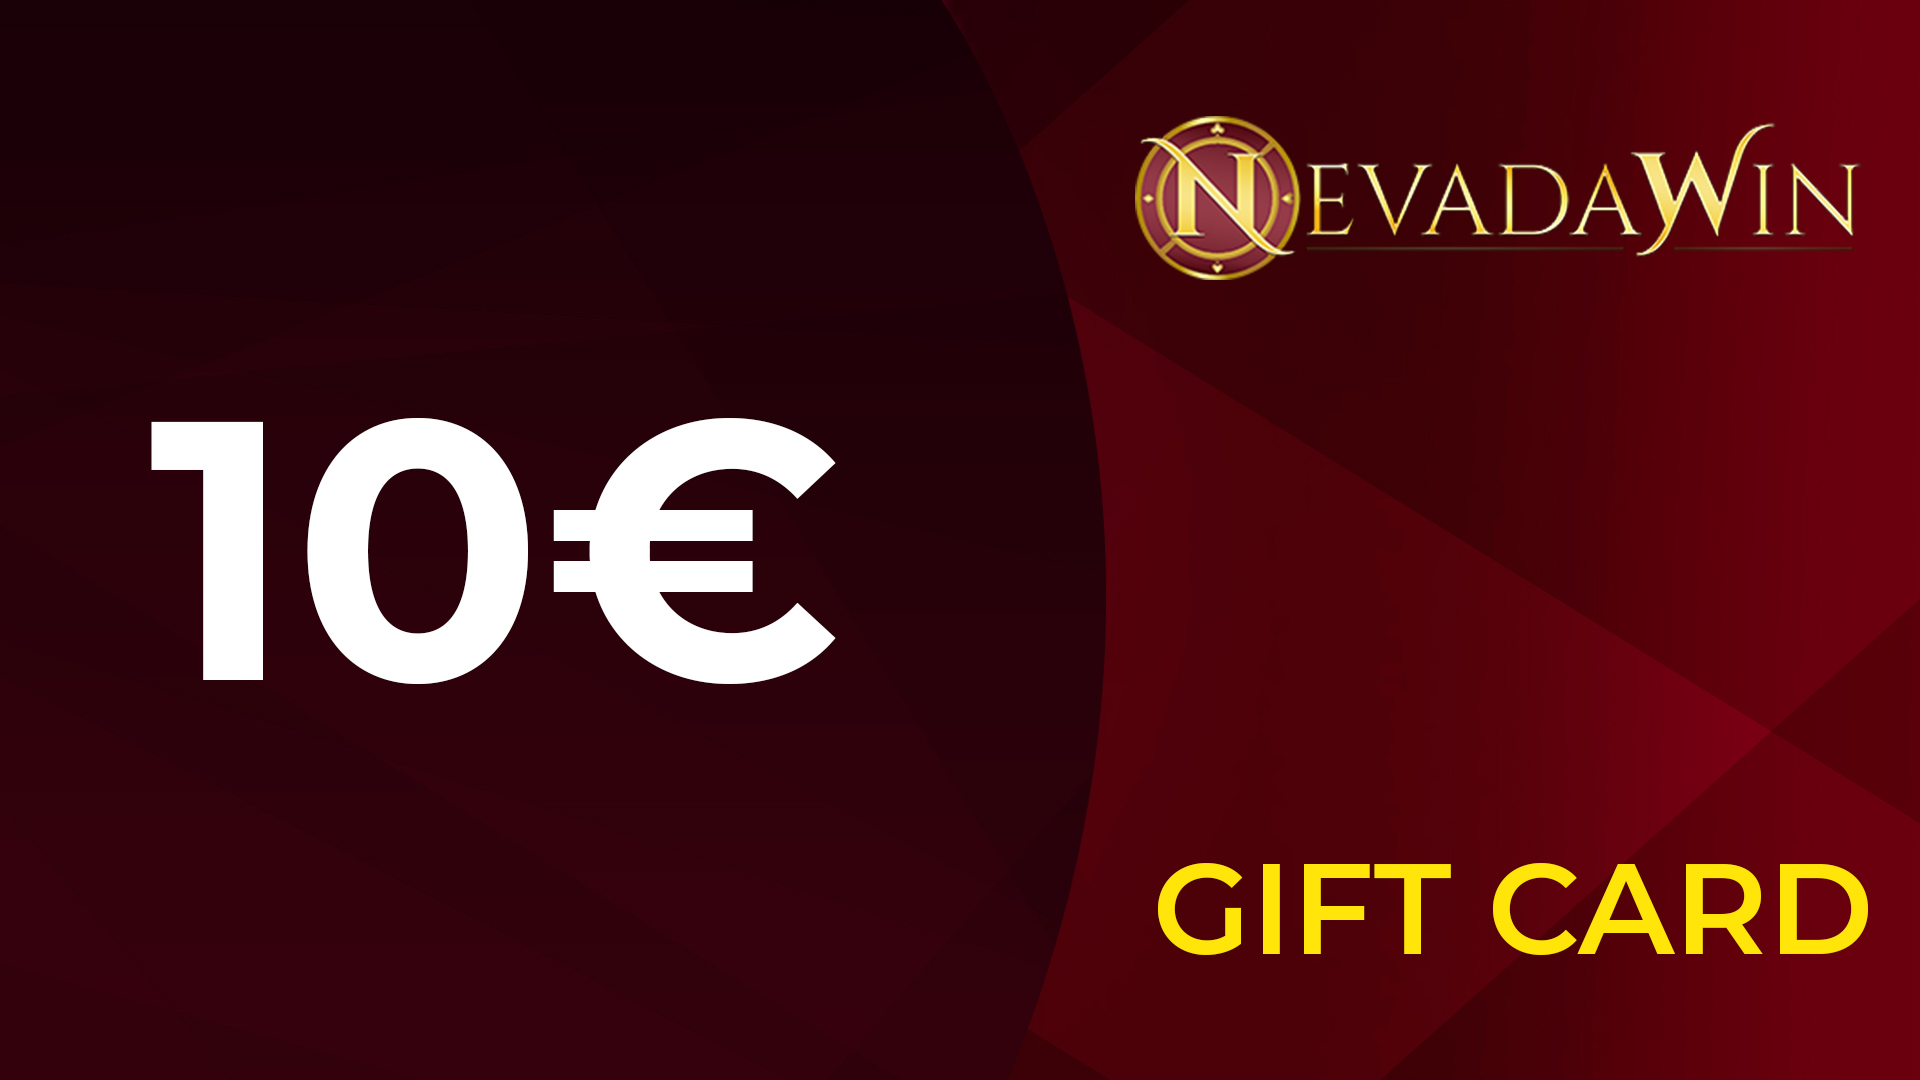 NevadaWin €10 Giftcard, $10.99